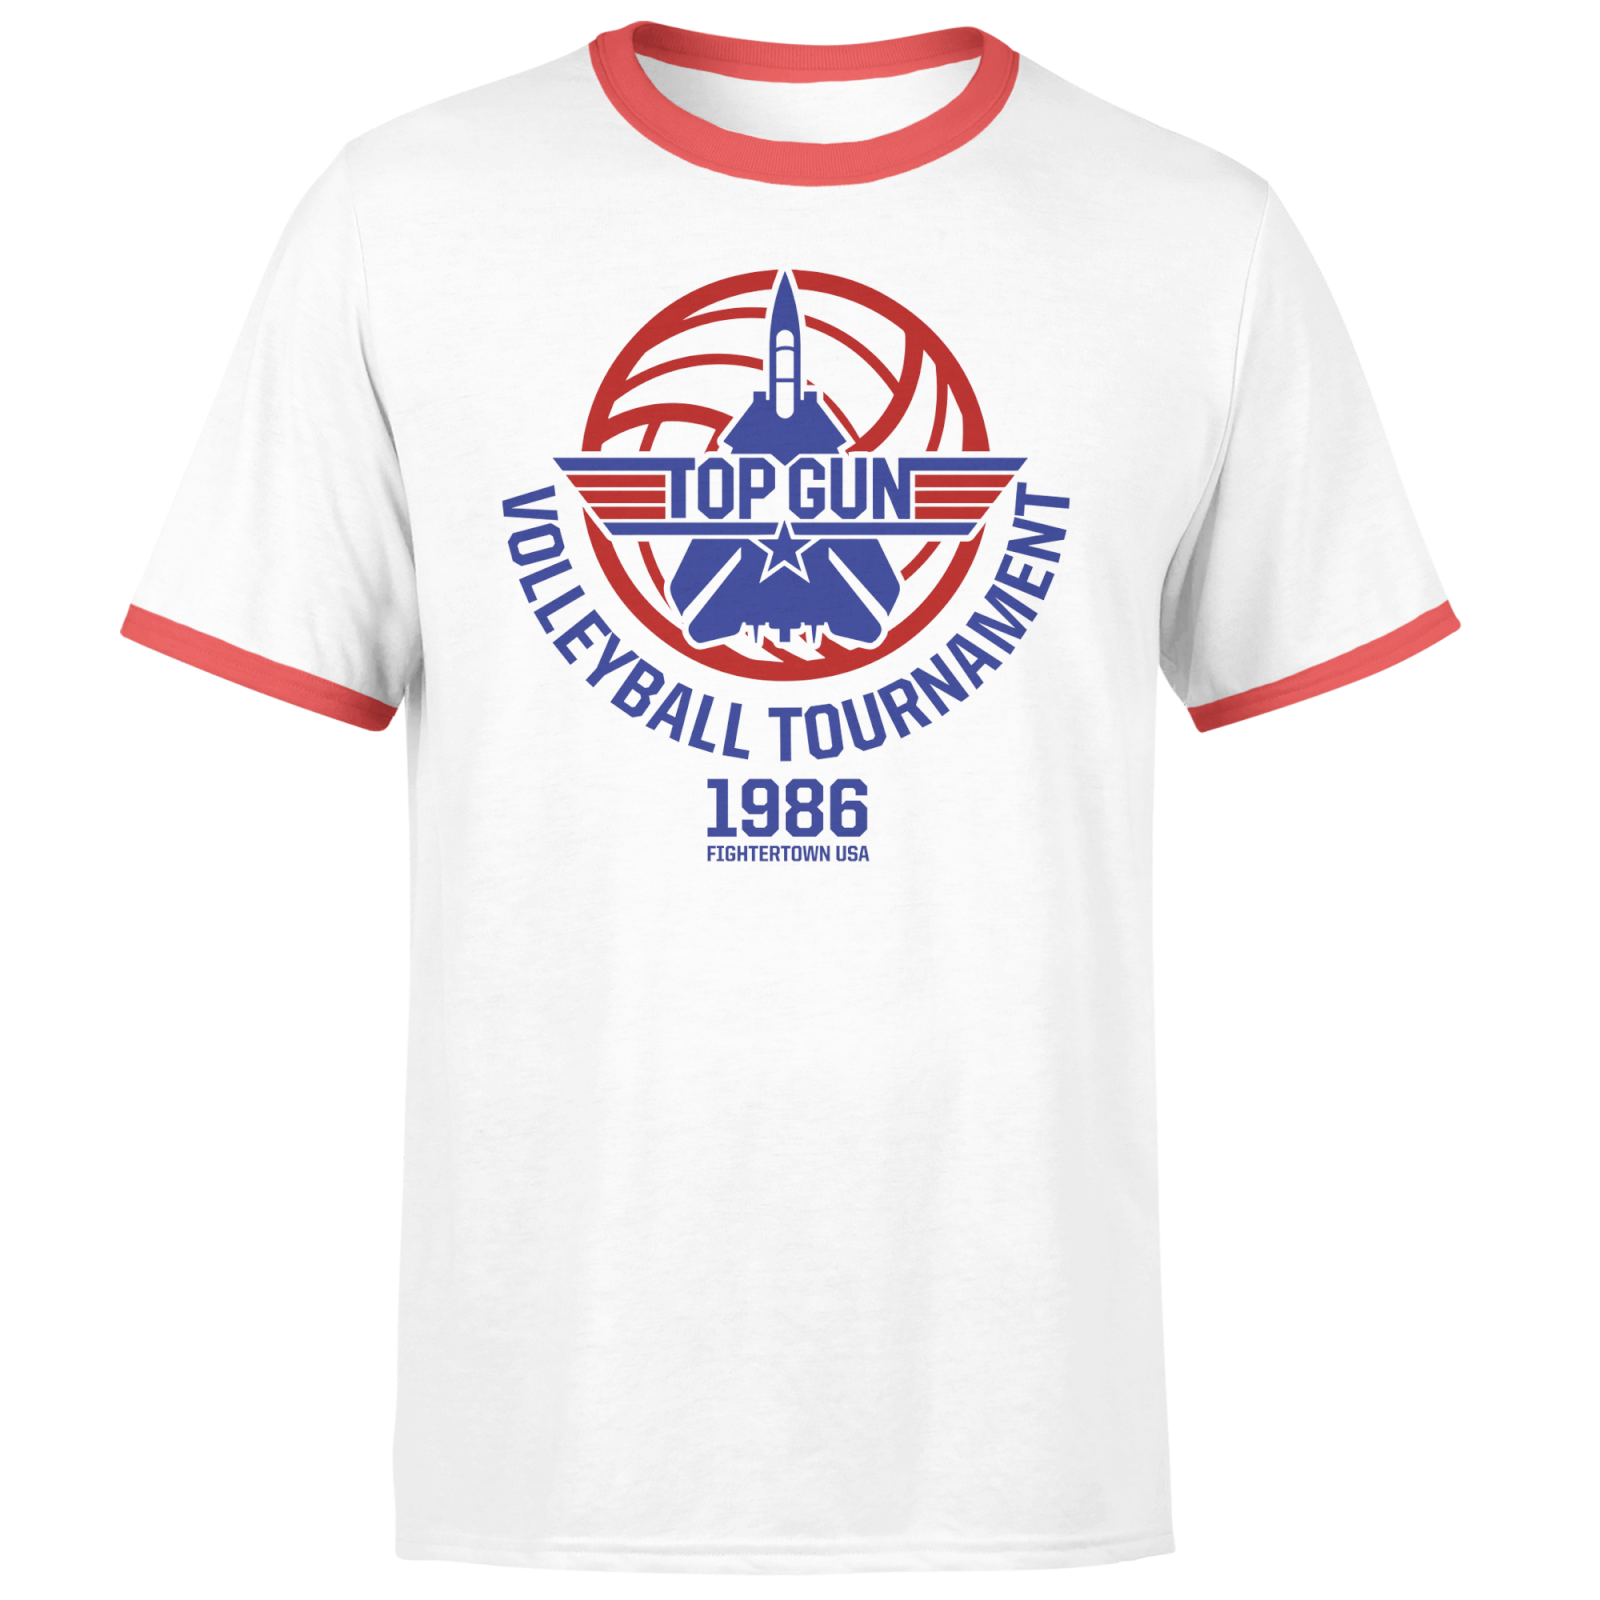 Top Gun Volleyball Tournament Unisex Ringer T-Shirt – White/Red – S – White/Red